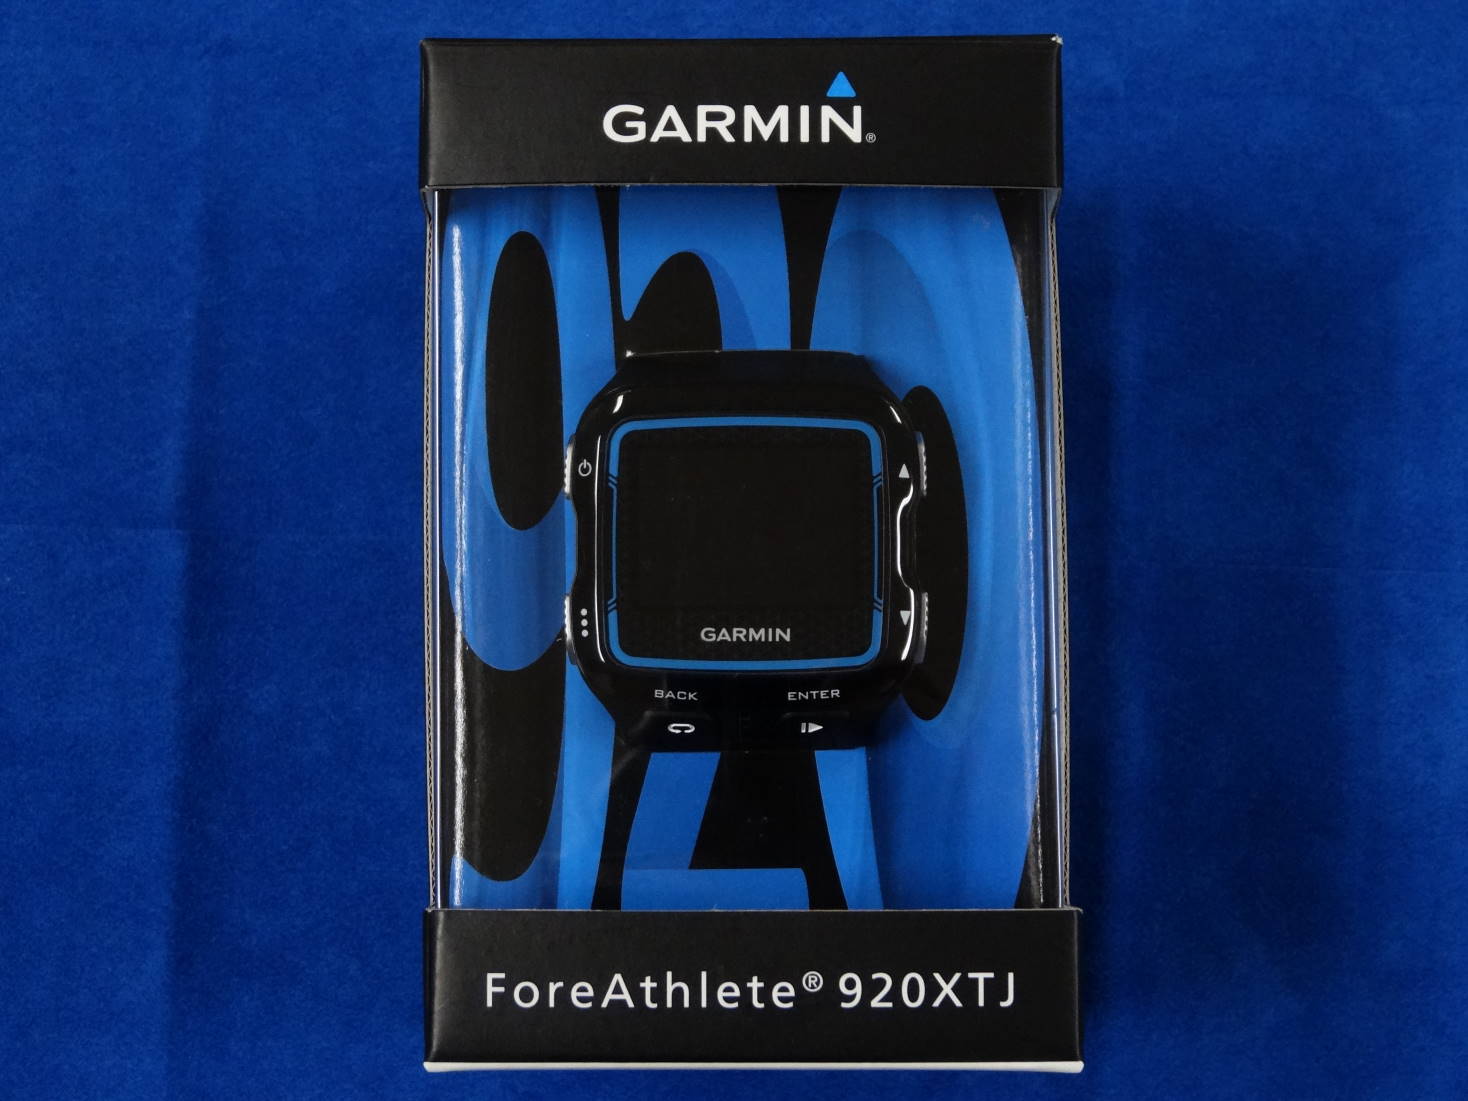 GARMIN ForeAthlete920XTJ のパッケージ